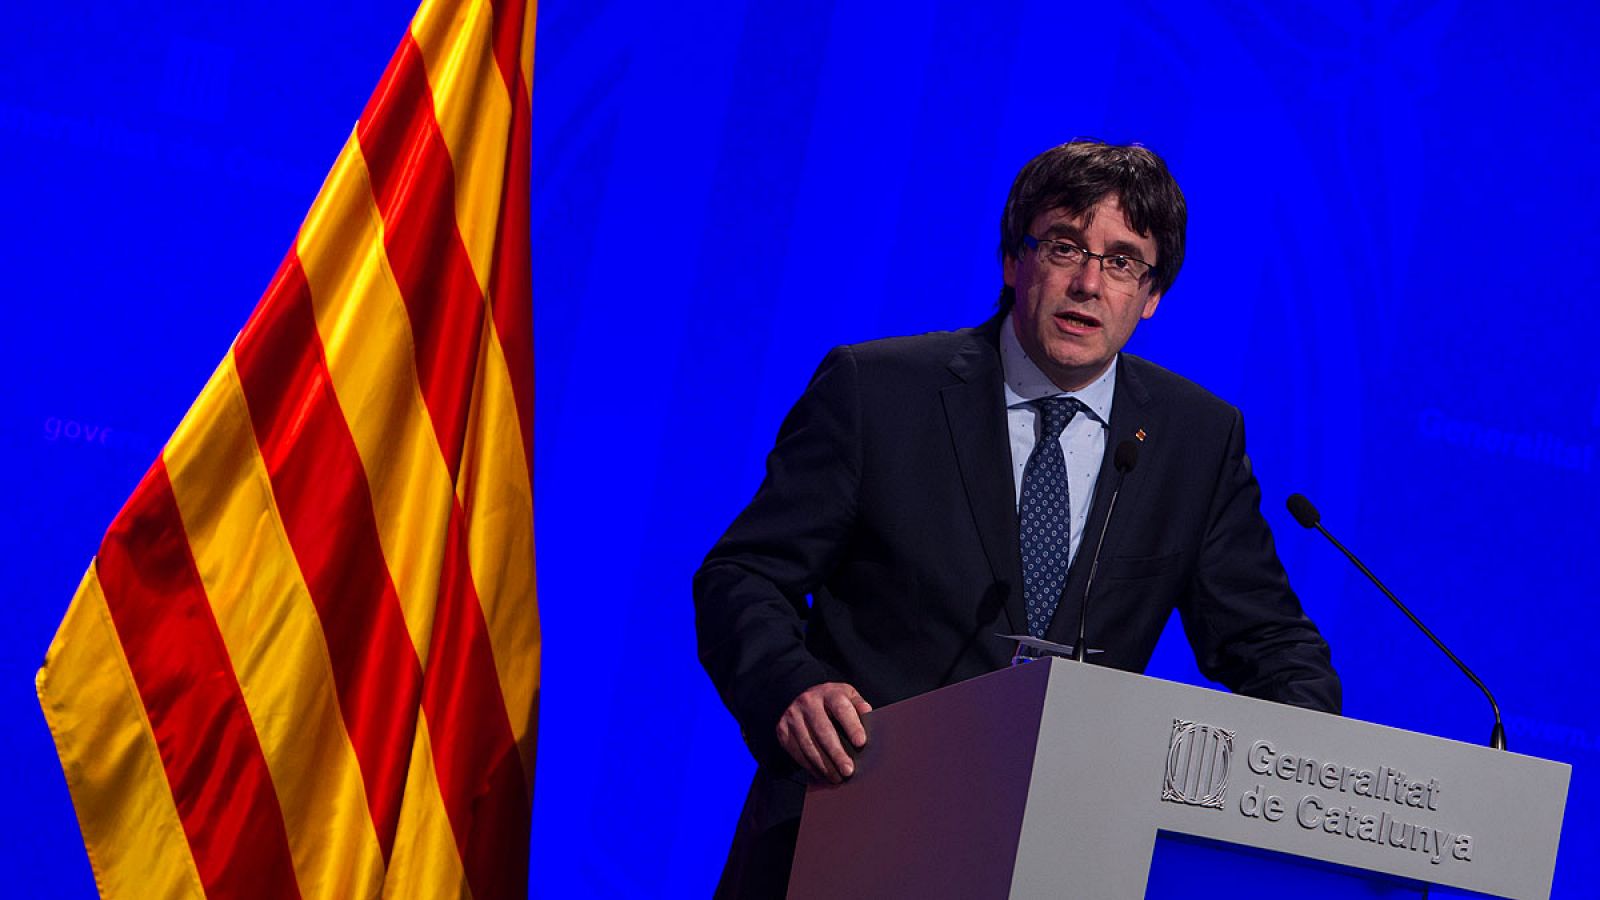 El presidente de la Generalitat de Catalunya, Carles Puigdemont